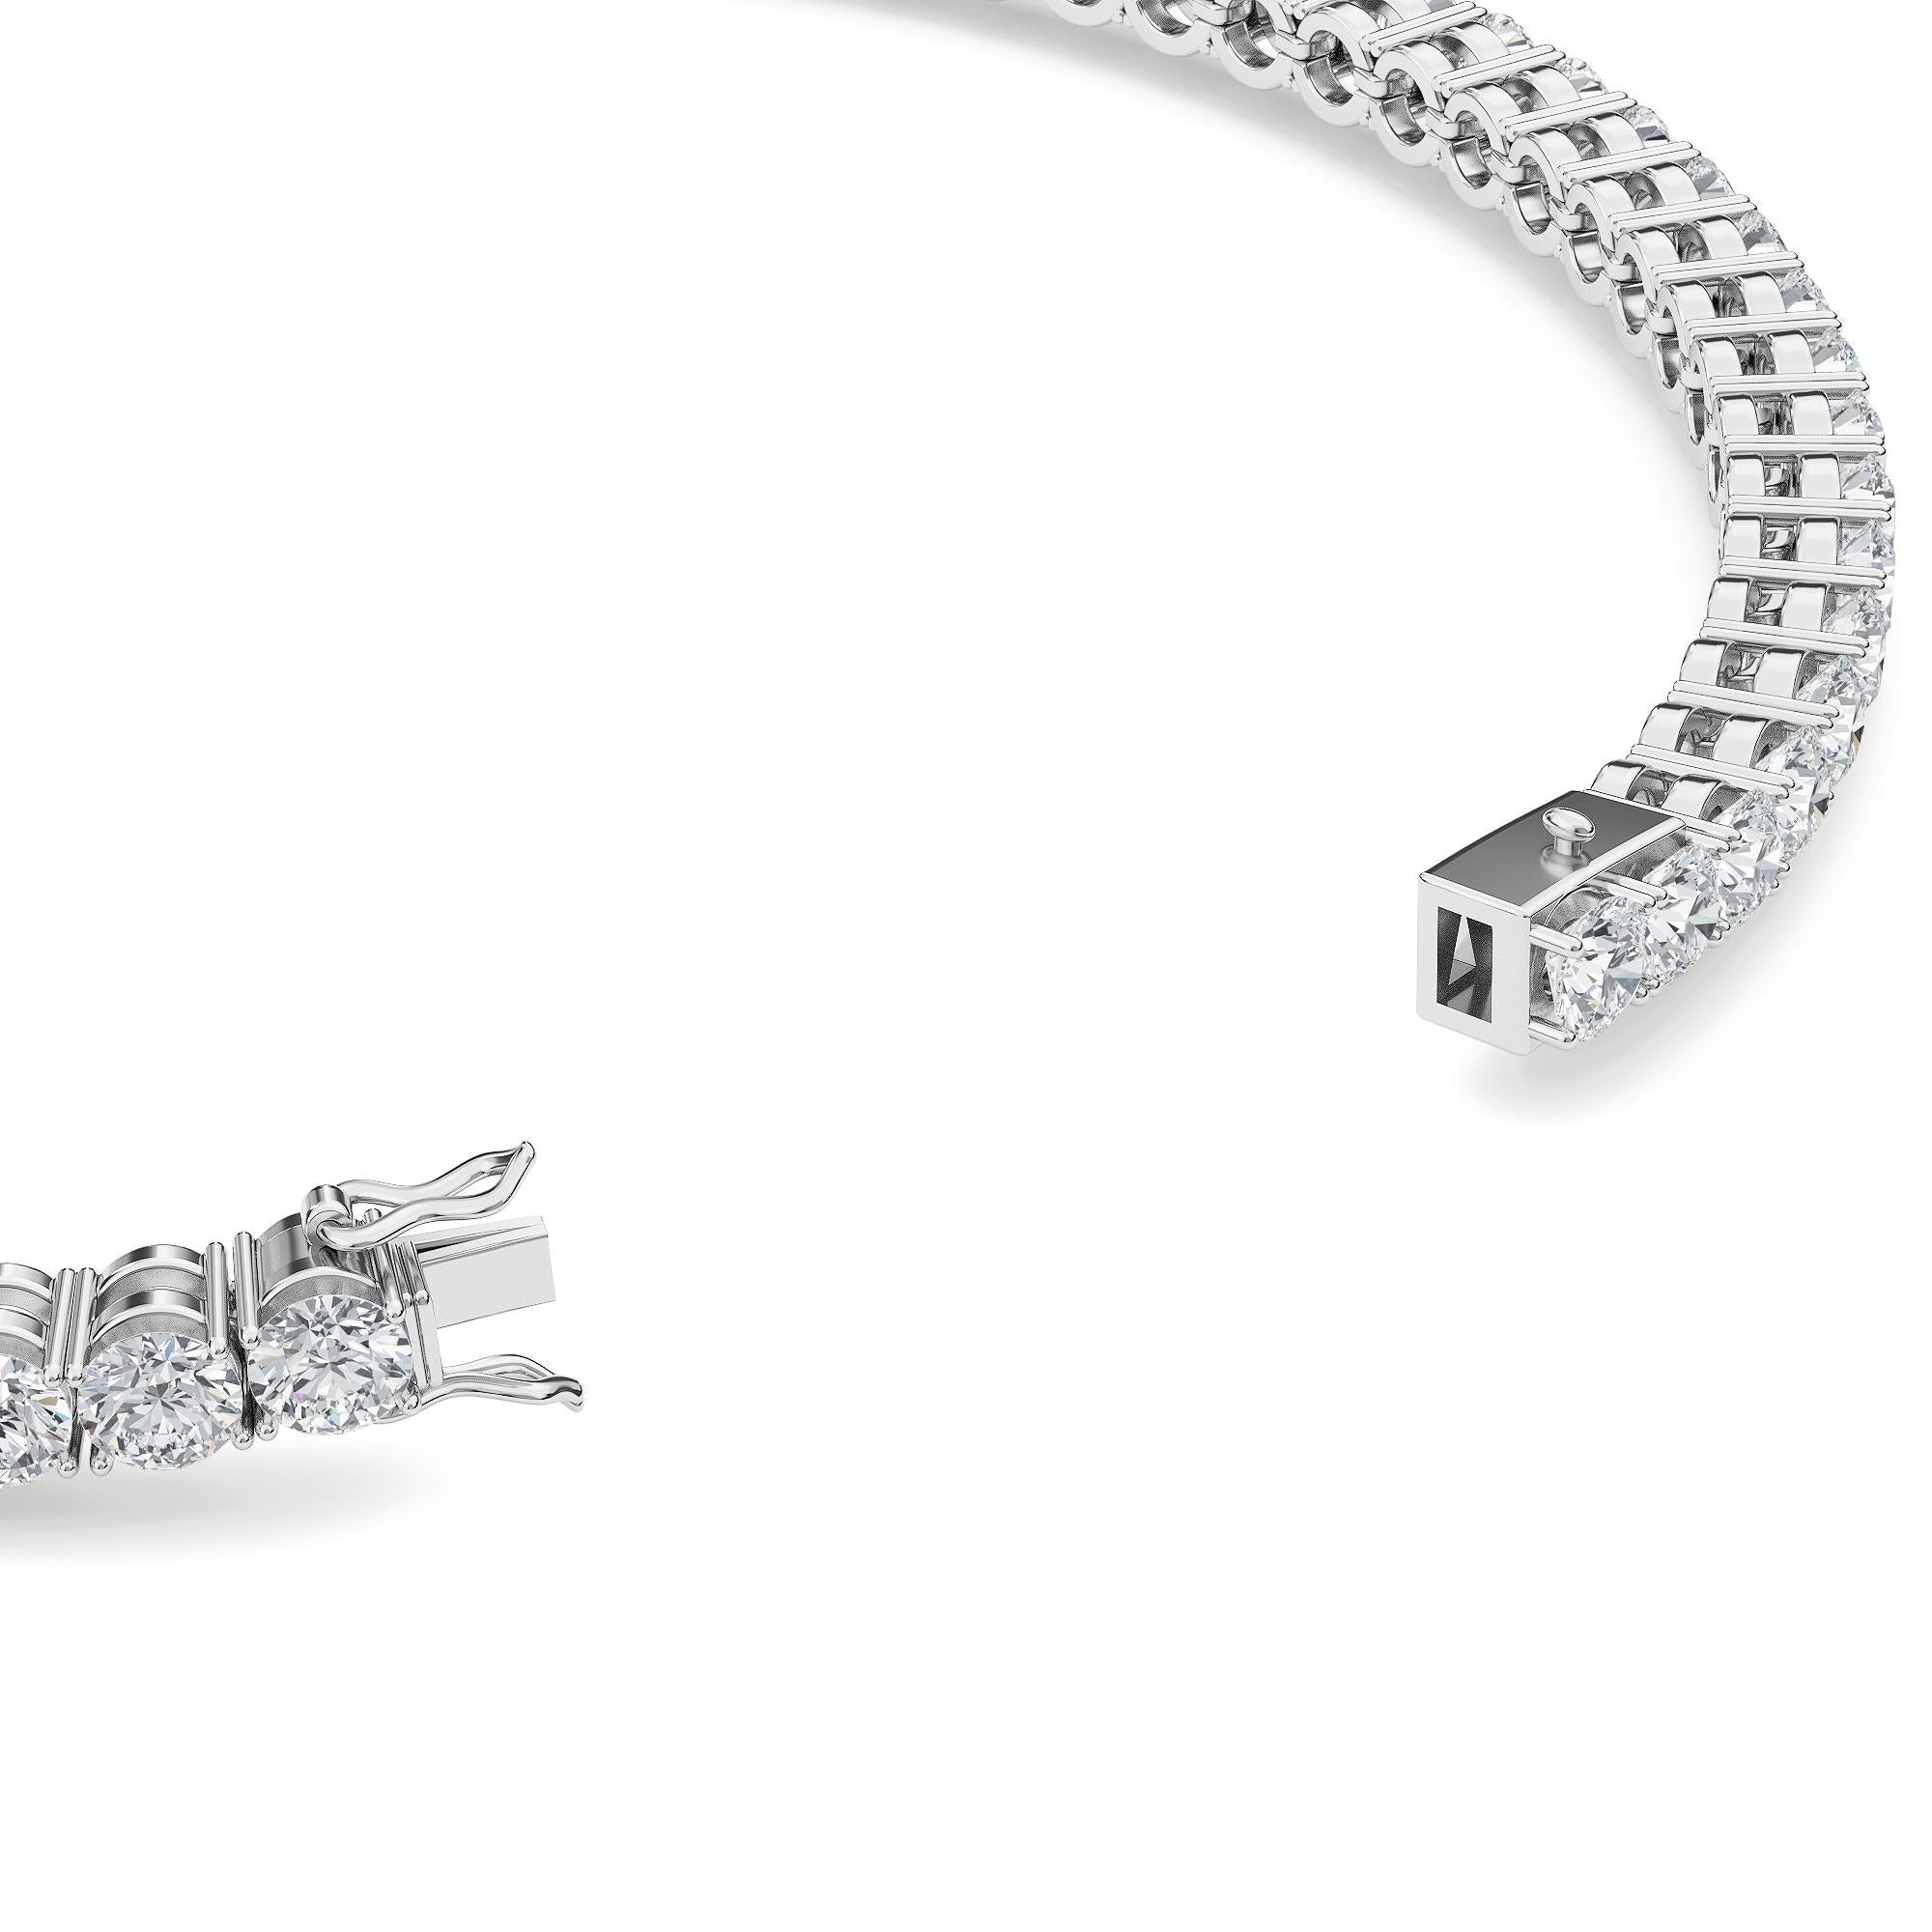 3.5 carat diamond tennis bracelet